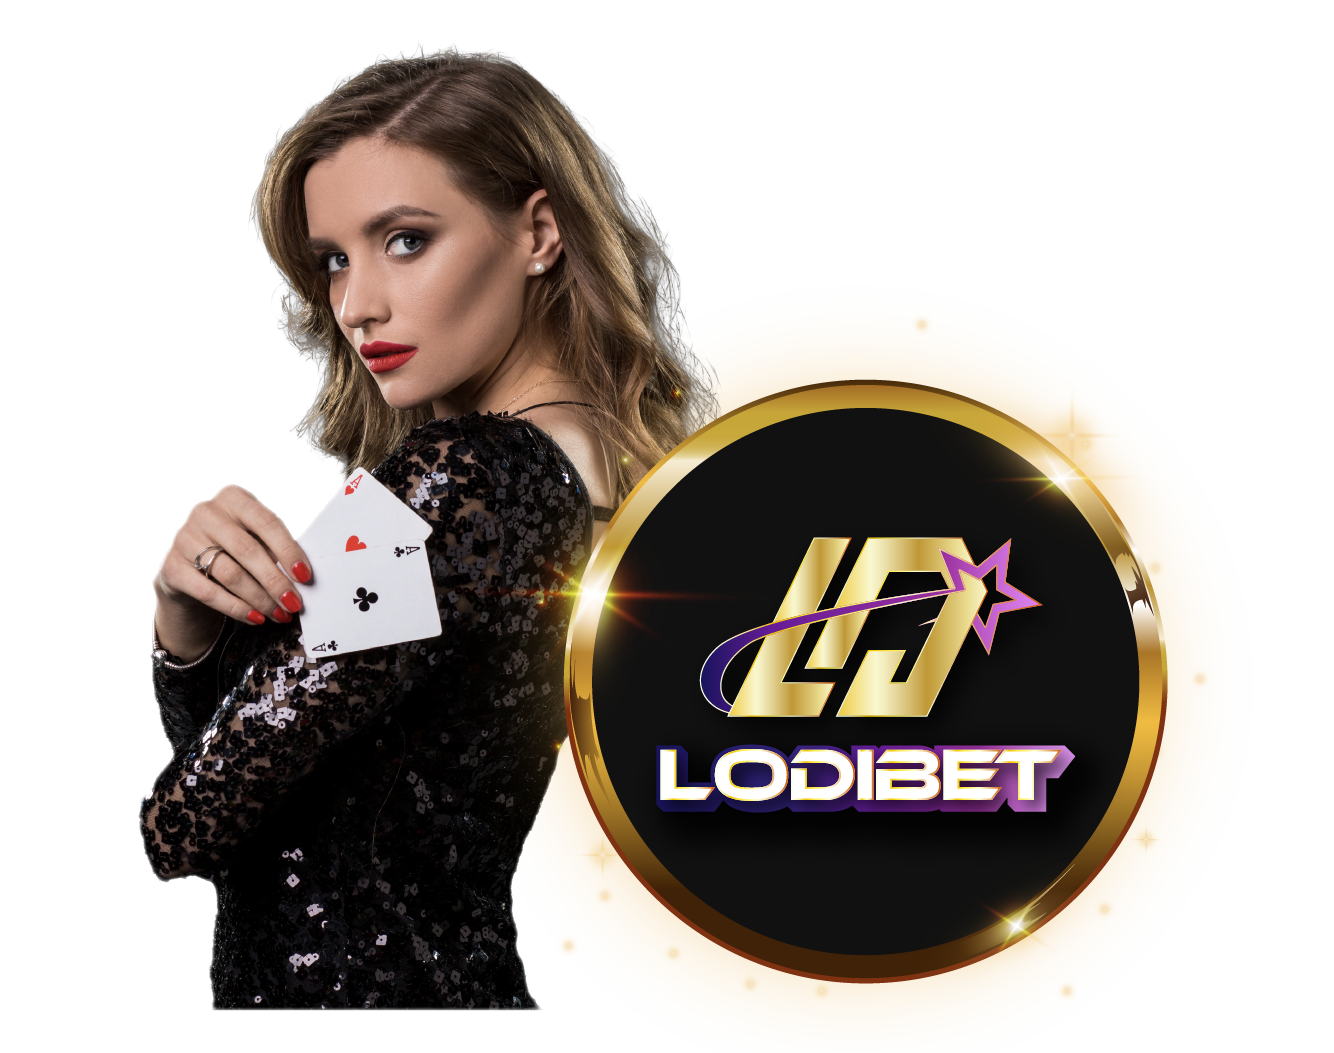 Lodibet logo & beauty dealer